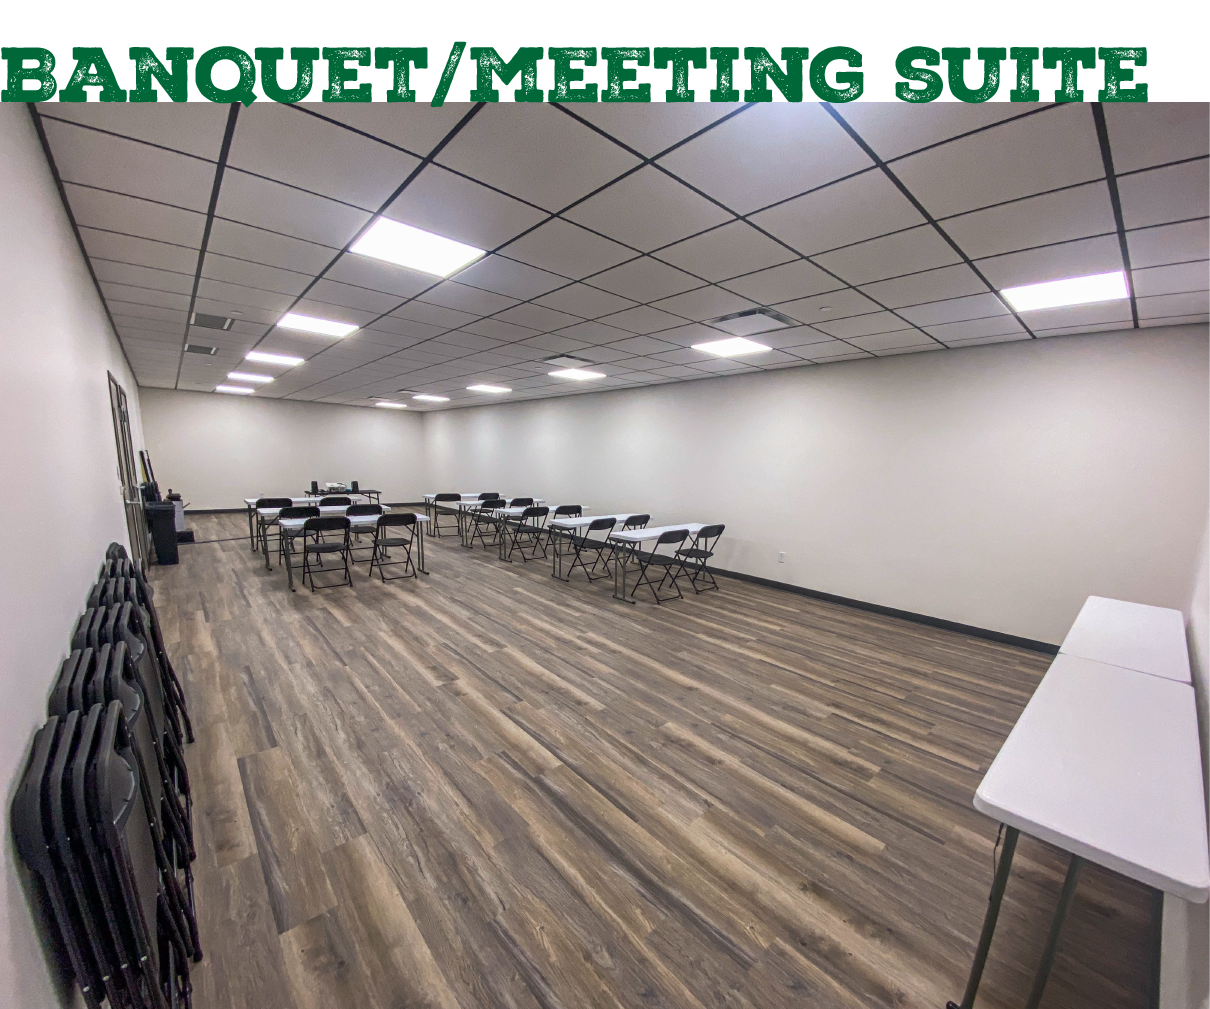 Banquet/Meeting room header